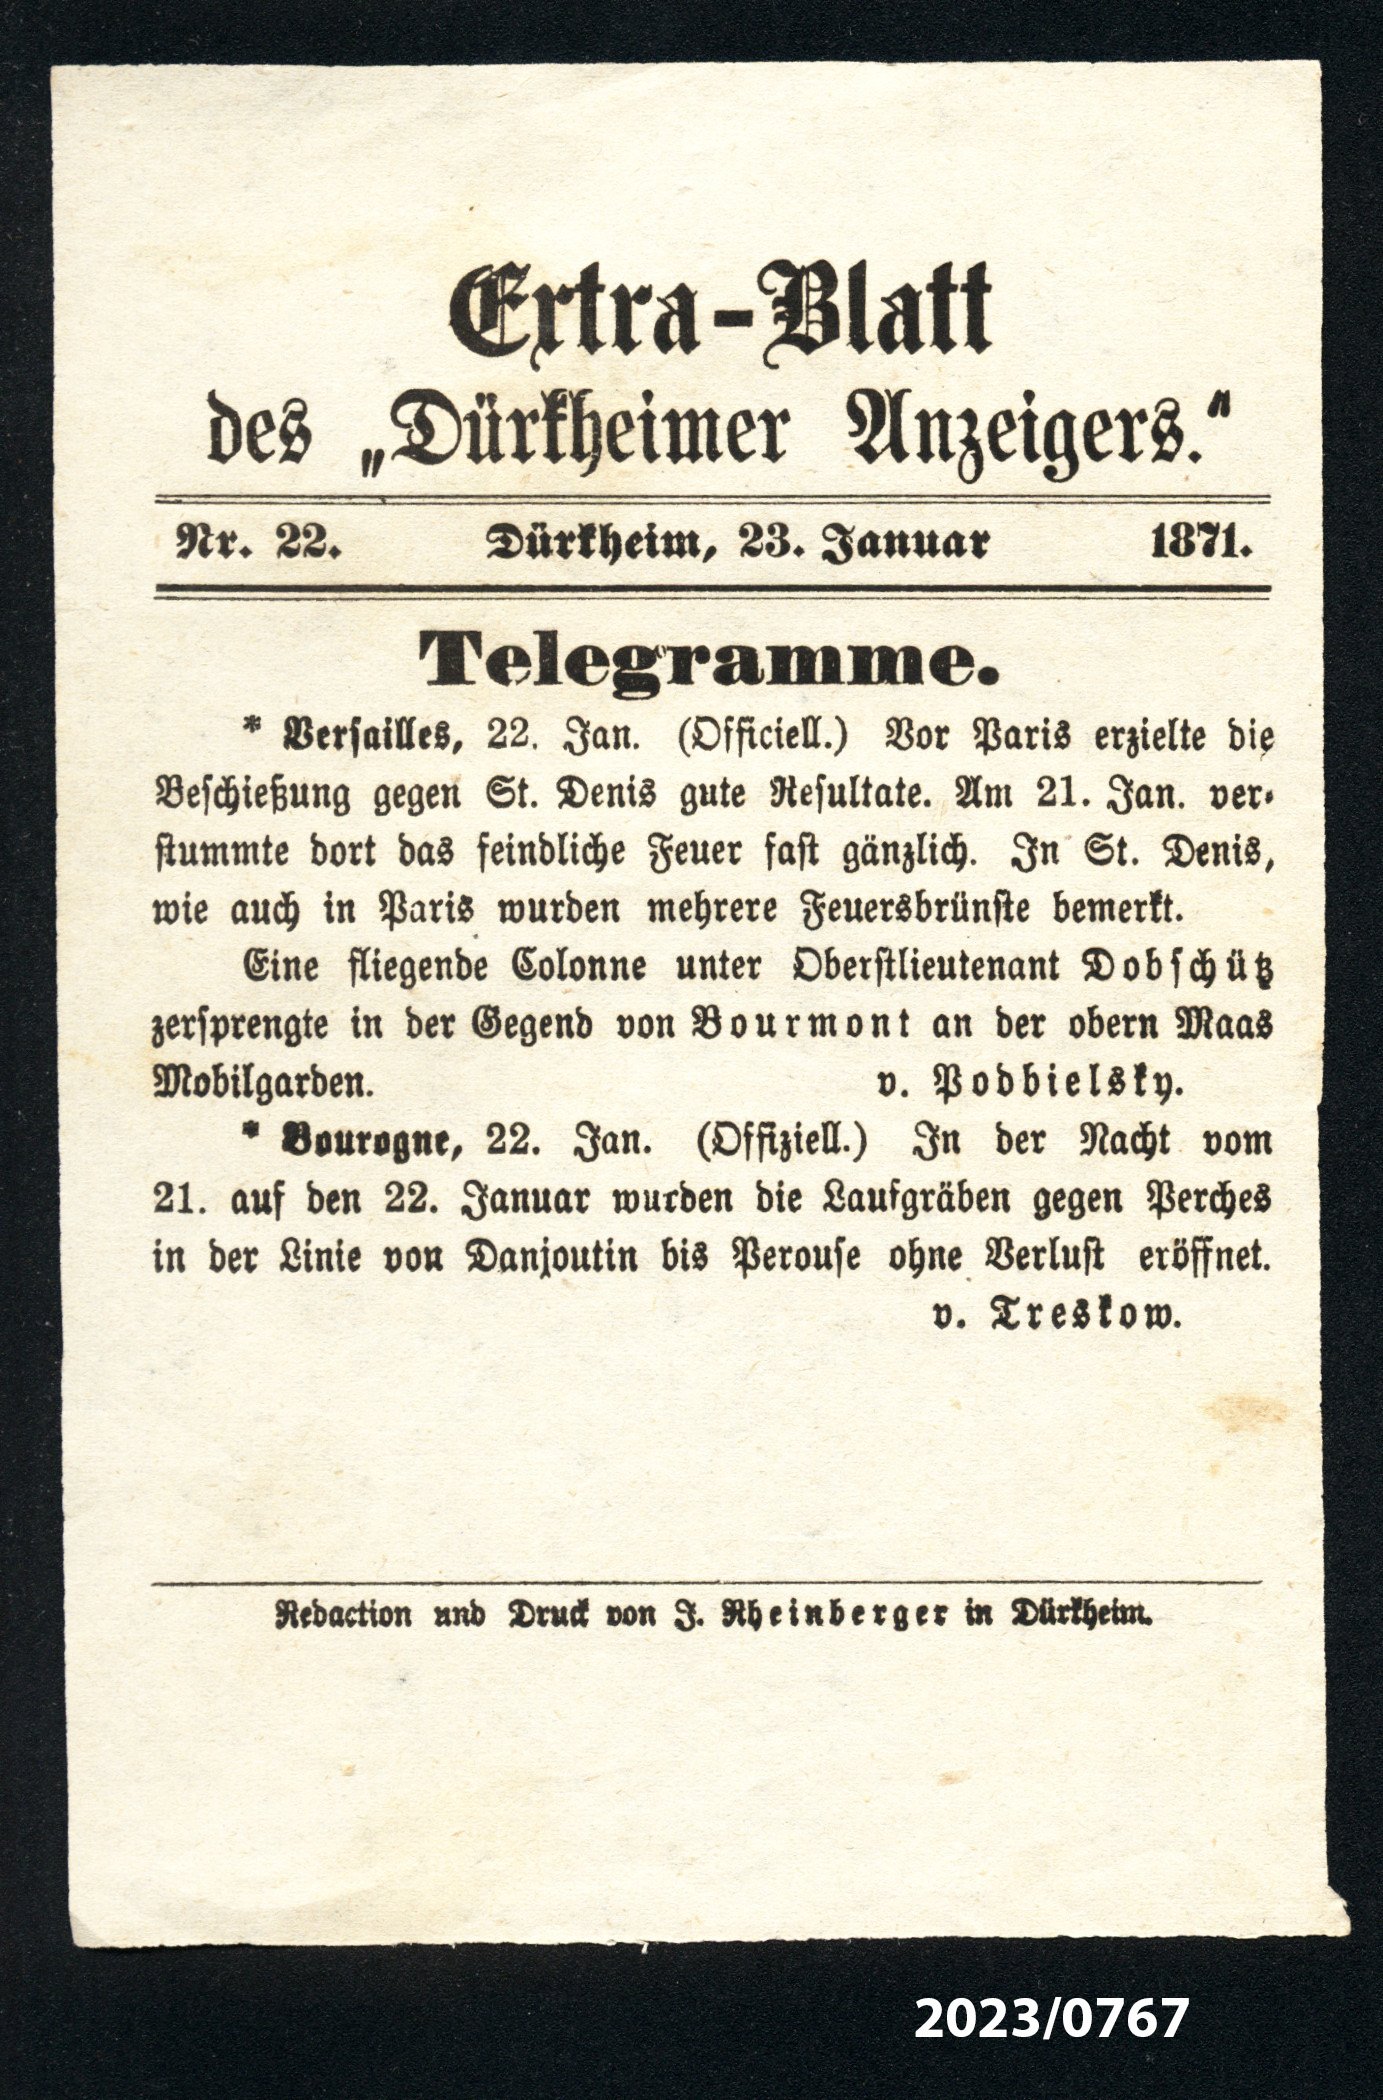 Extra-Blatt des "Dürkheimer Anzeigers." Nr. 22, 23.1.1871 (Stadtmuseum Bad Dürkheim im Kulturzentrum Haus Catoir CC BY-NC-SA)